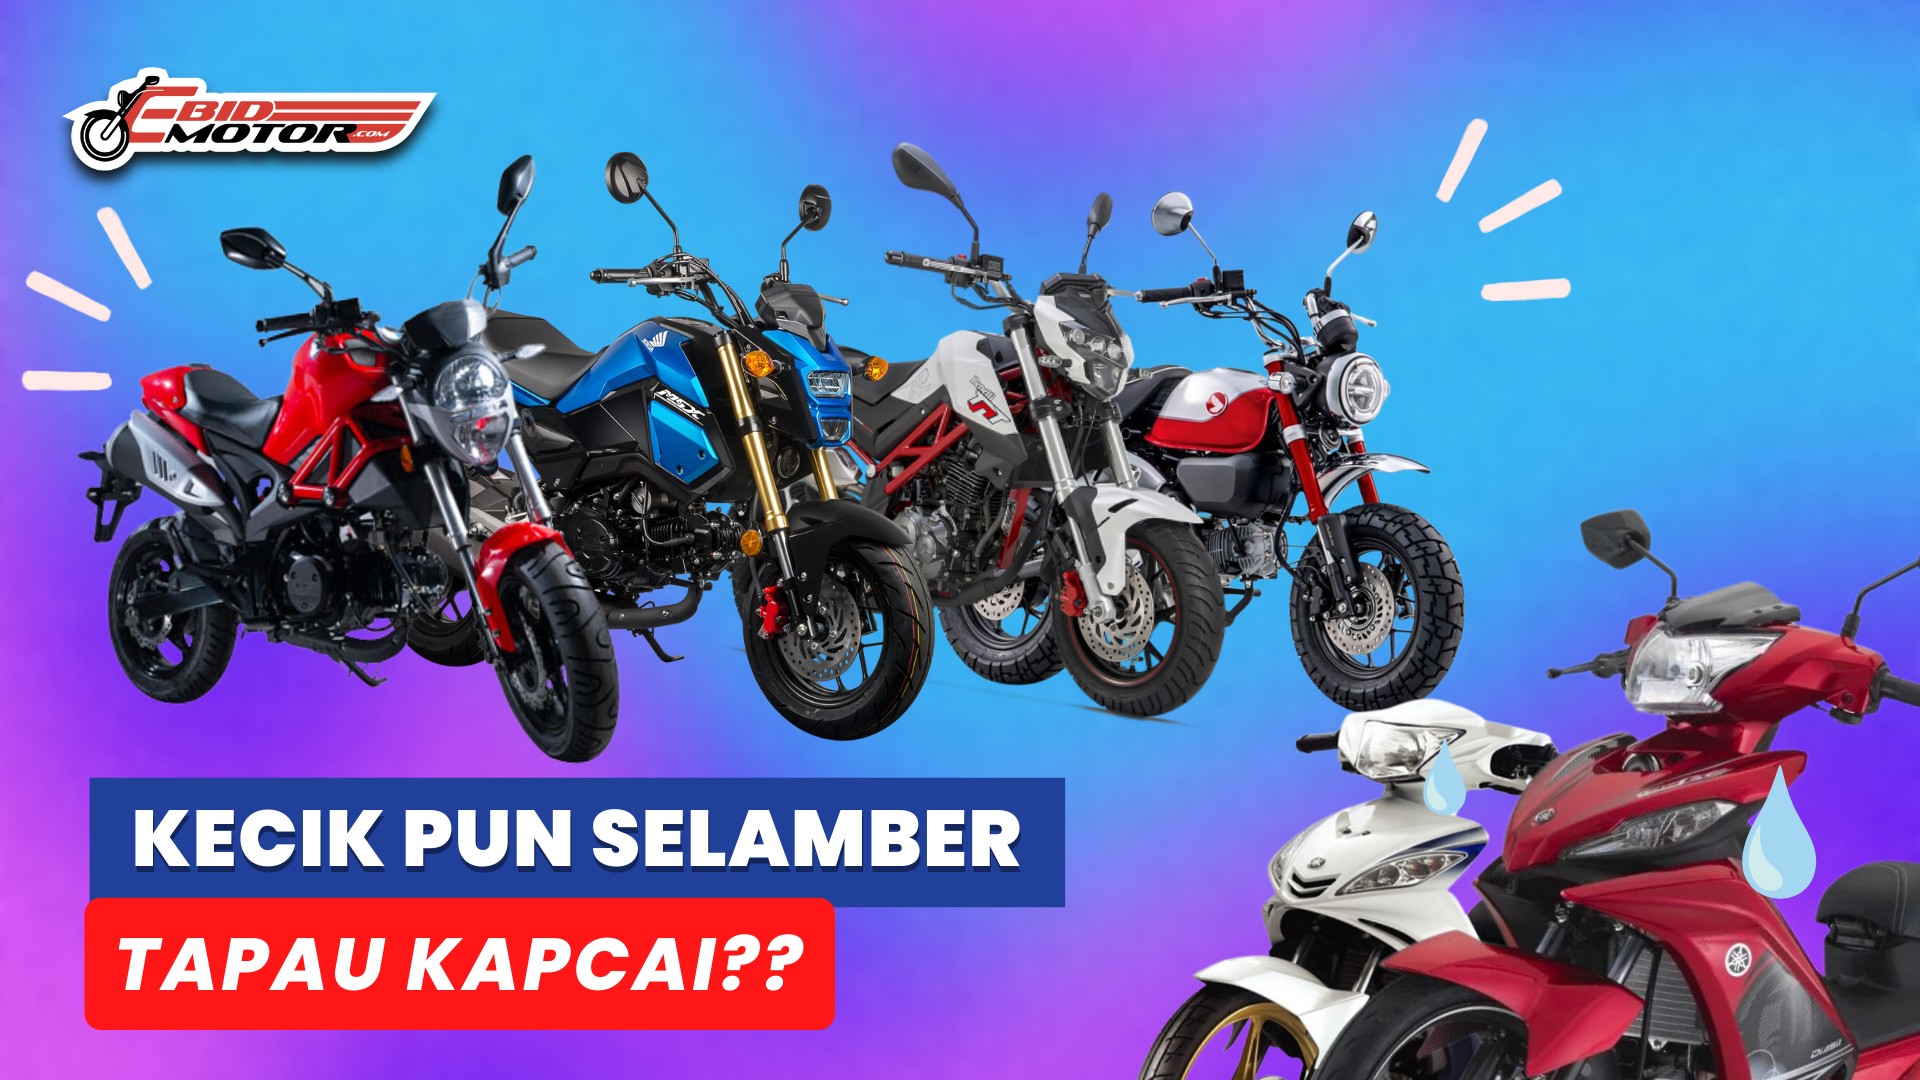 #Katalog: Funbike - Motor Kemetot, Tapi Boleh Fight LC135?!